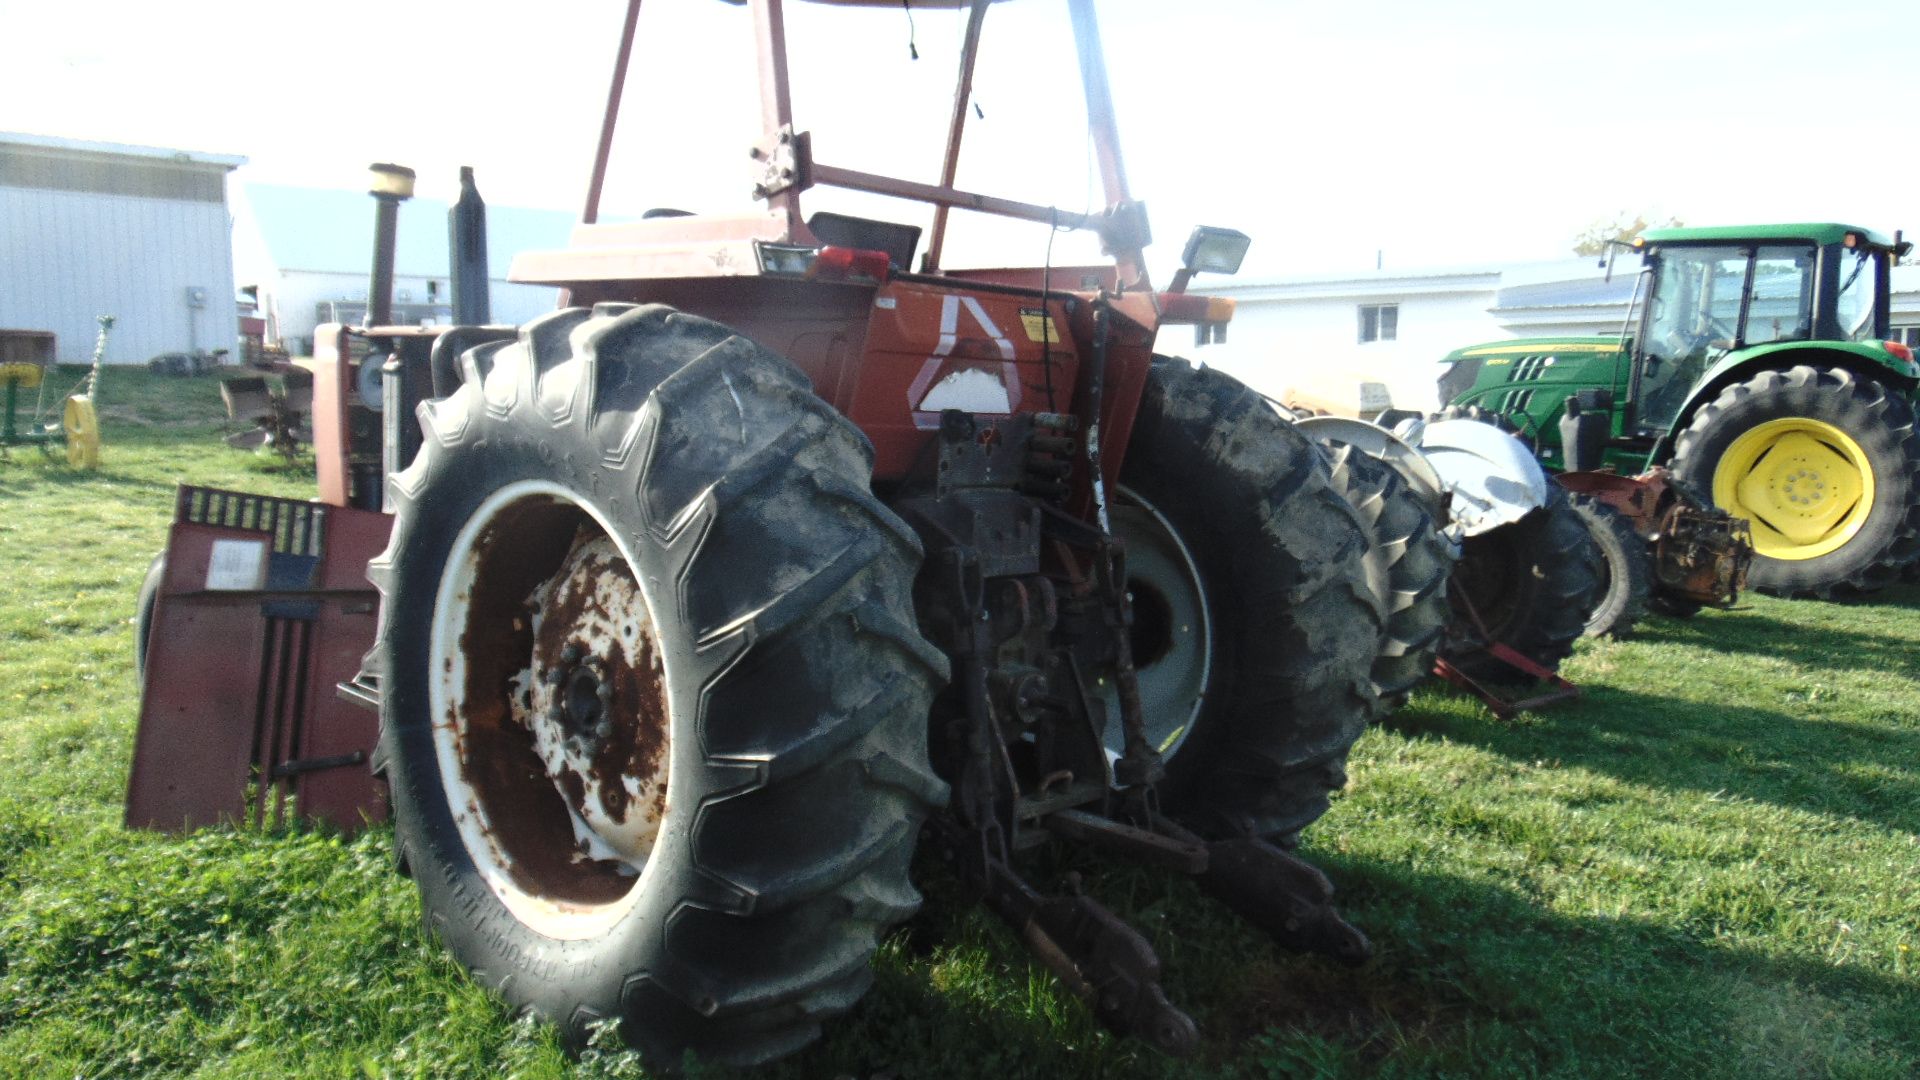 Hesston 90 -90 Tractor - Image 2 of 3